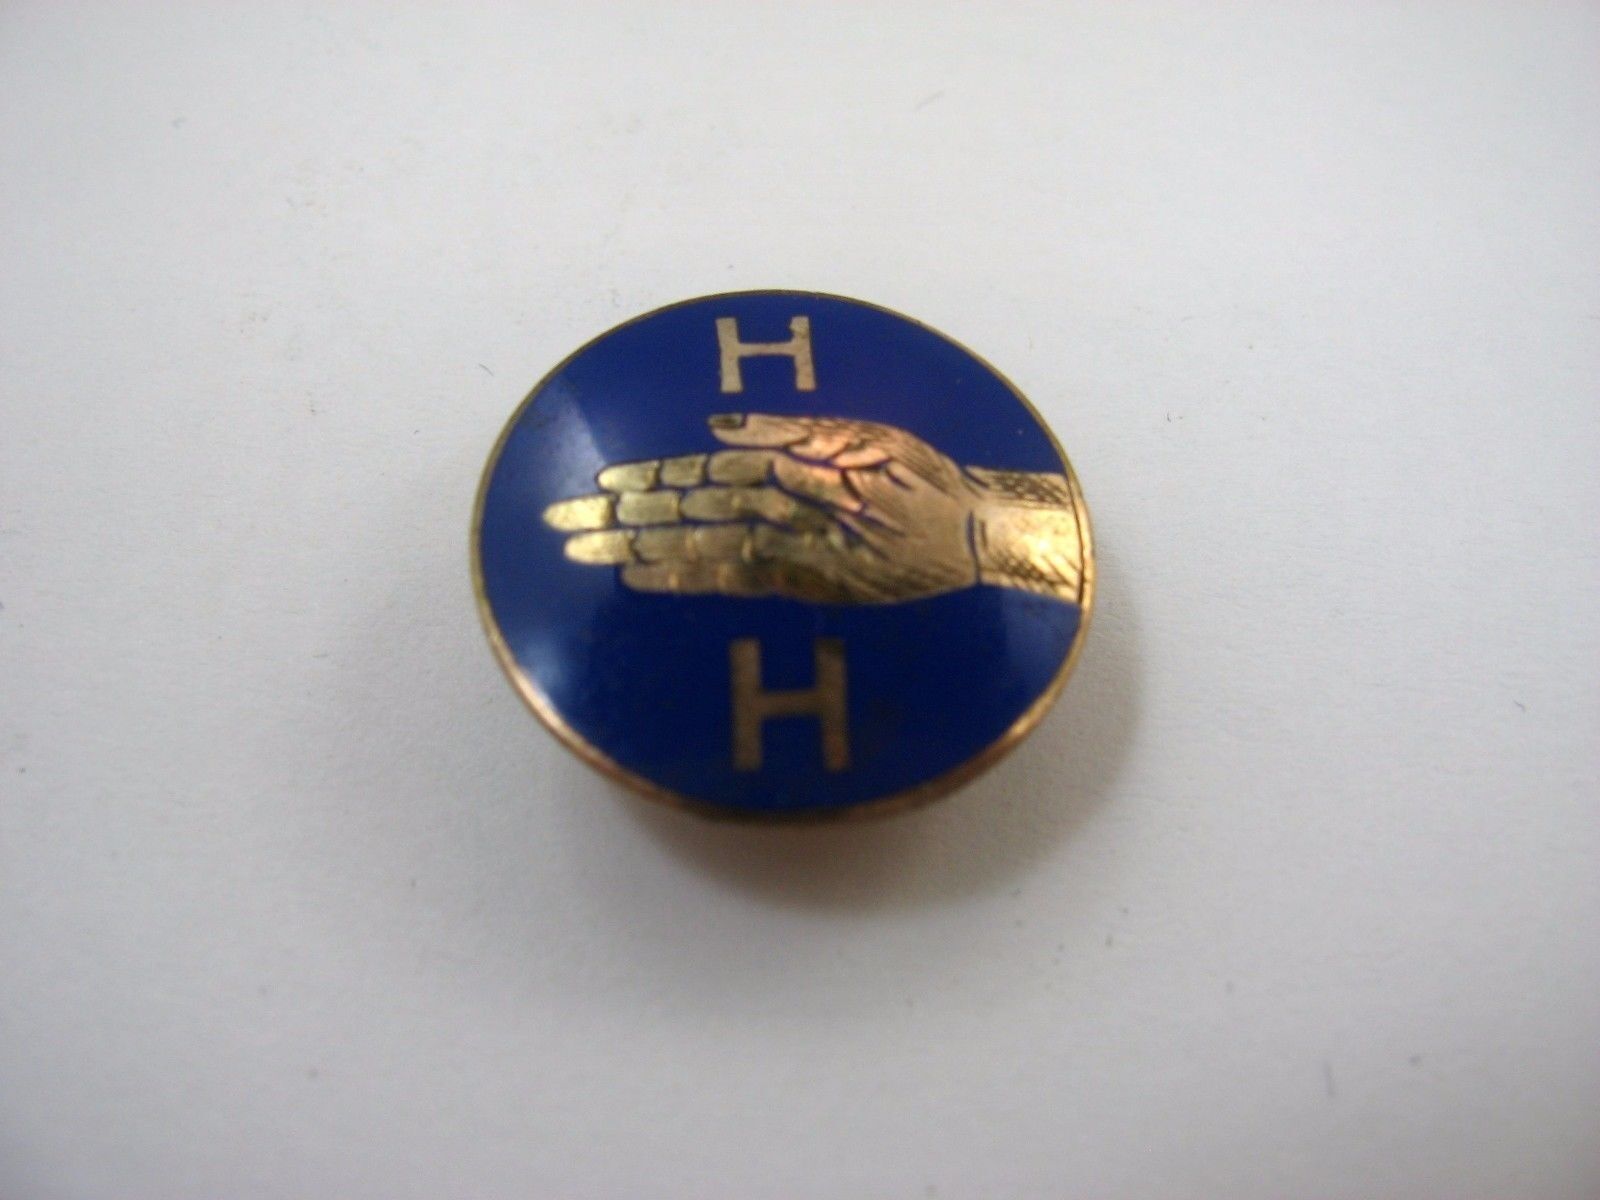 Rare Vintage Collectible Pin: H H Hand Design Blue Enamel 